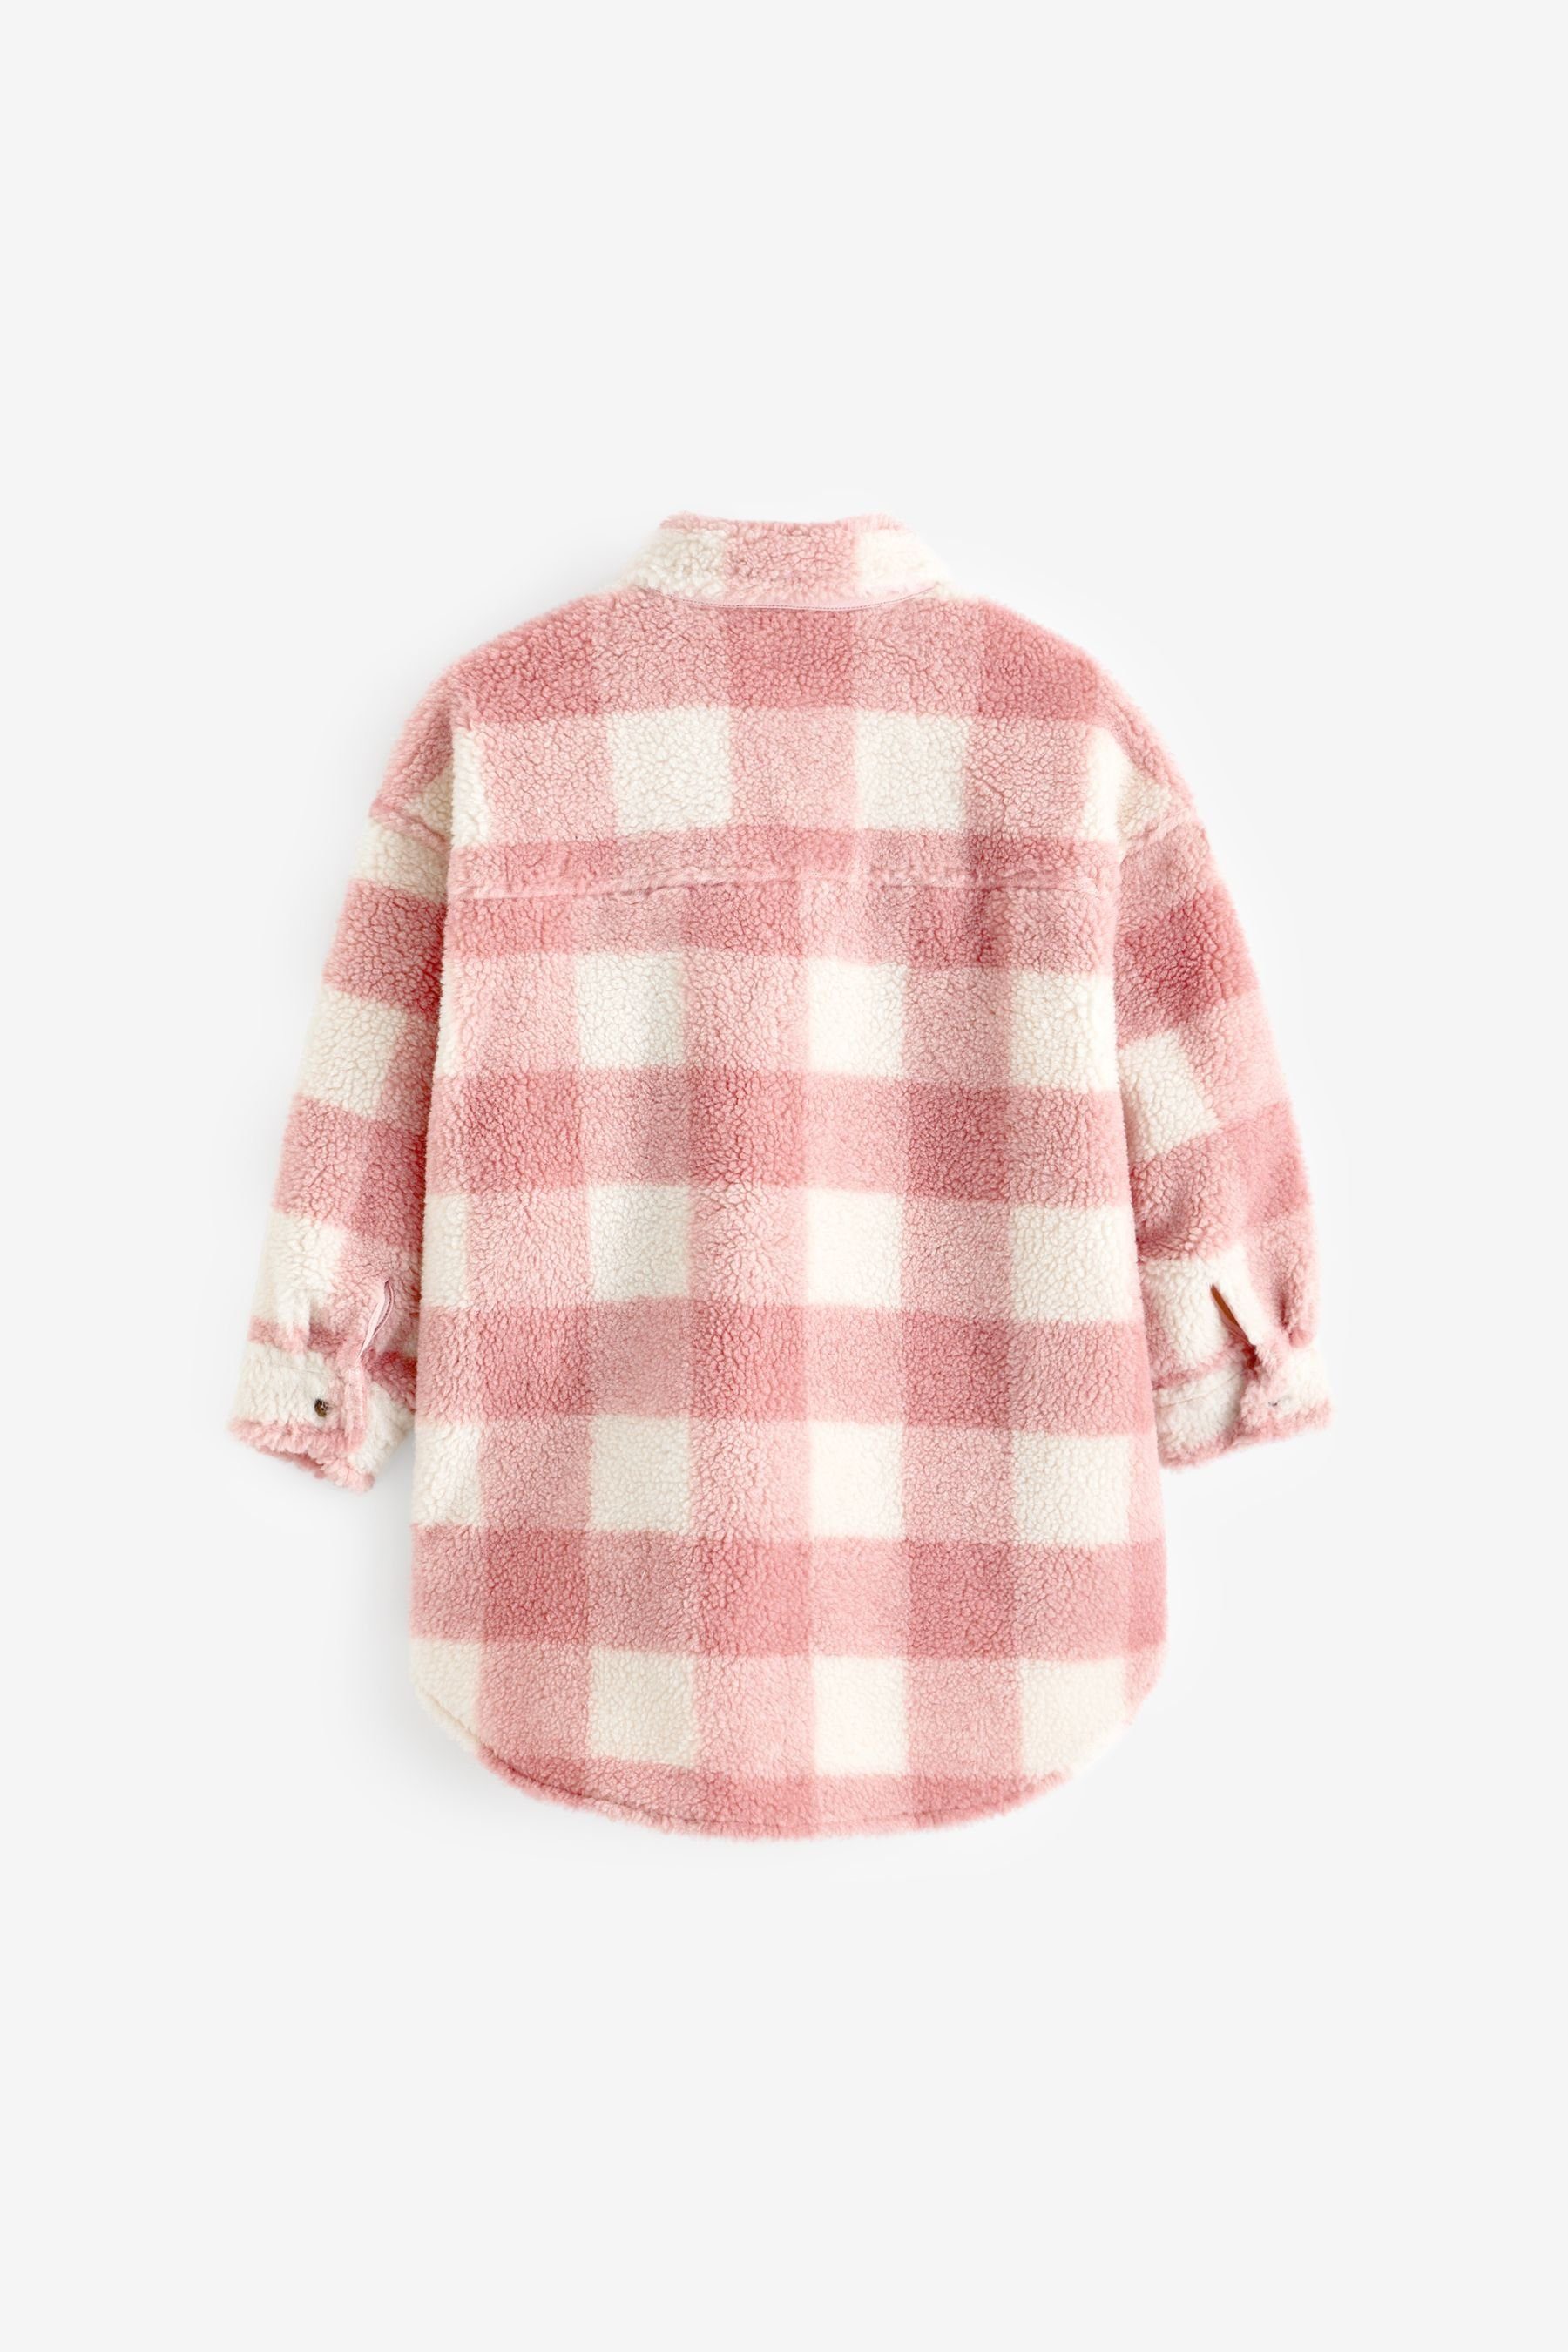 Check aus Pink Teddystoff Fleecejacke (1-St) Next Fleece-Hemdjacke